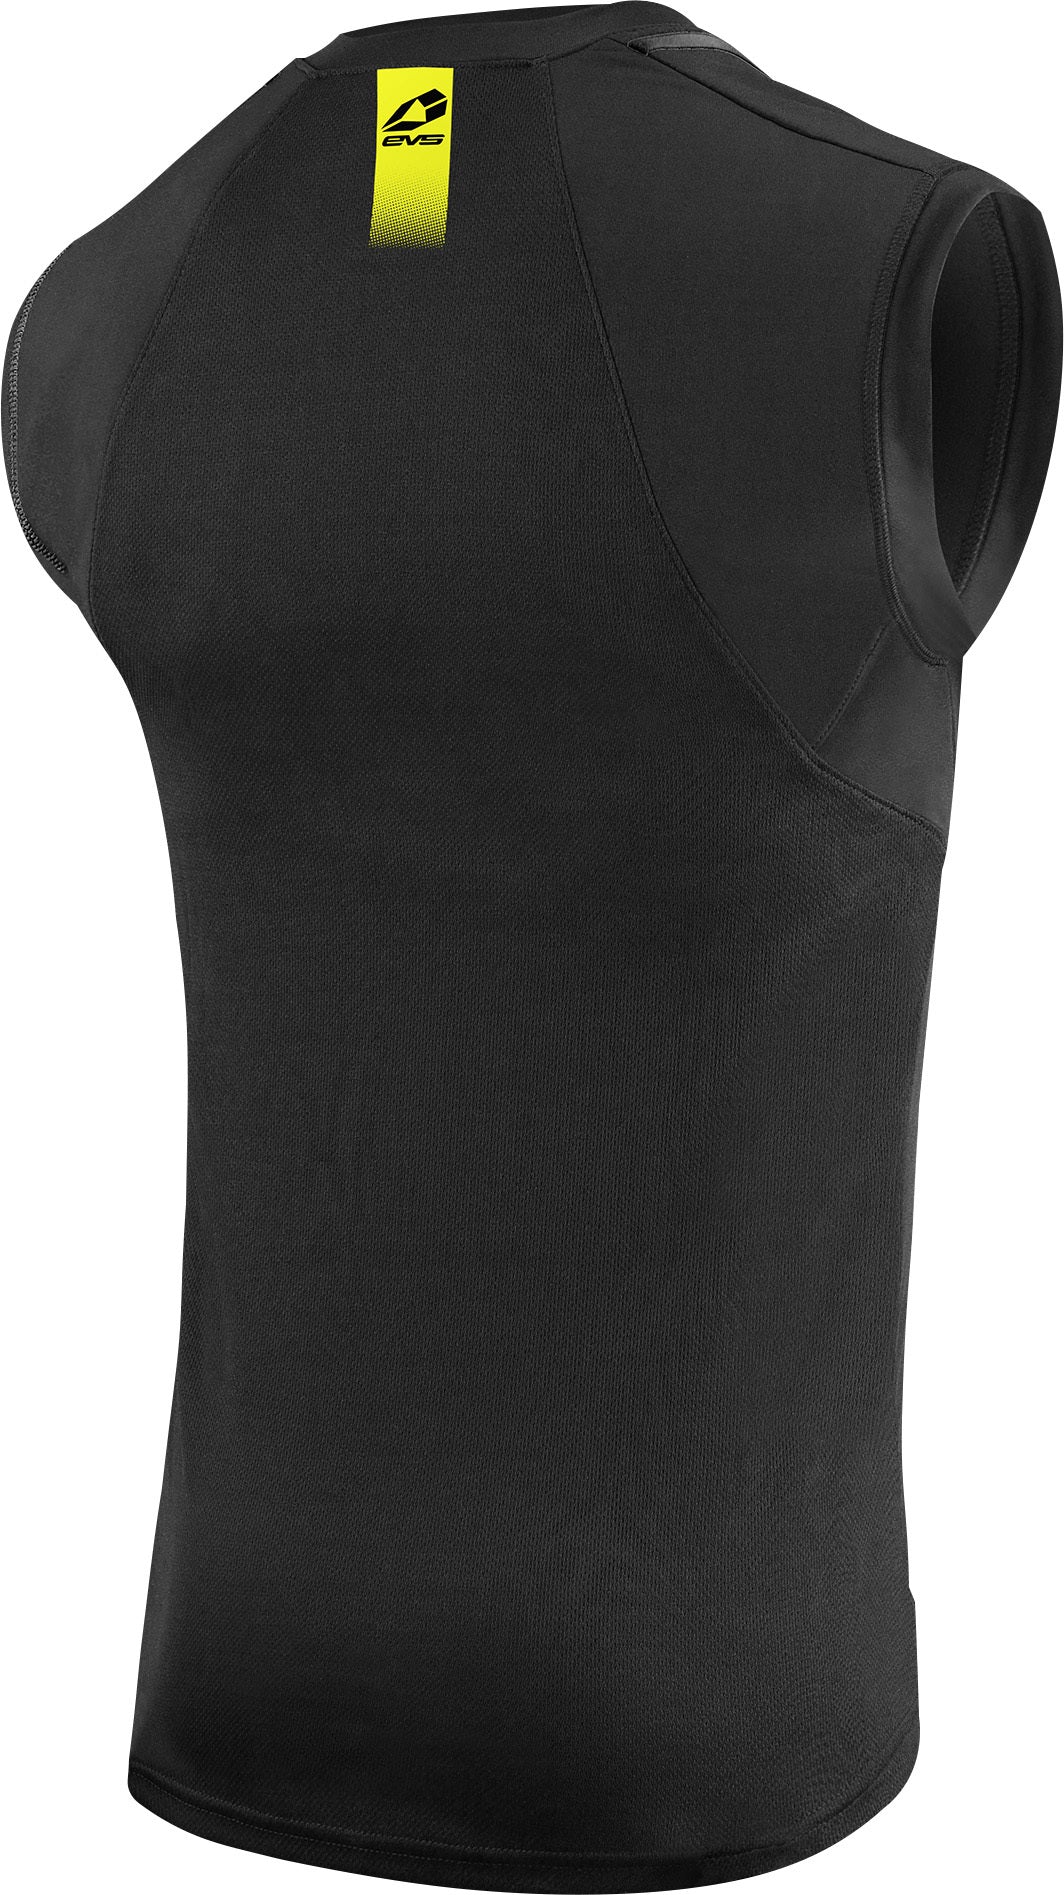 Sleeveless Tug Shirt Black 2x